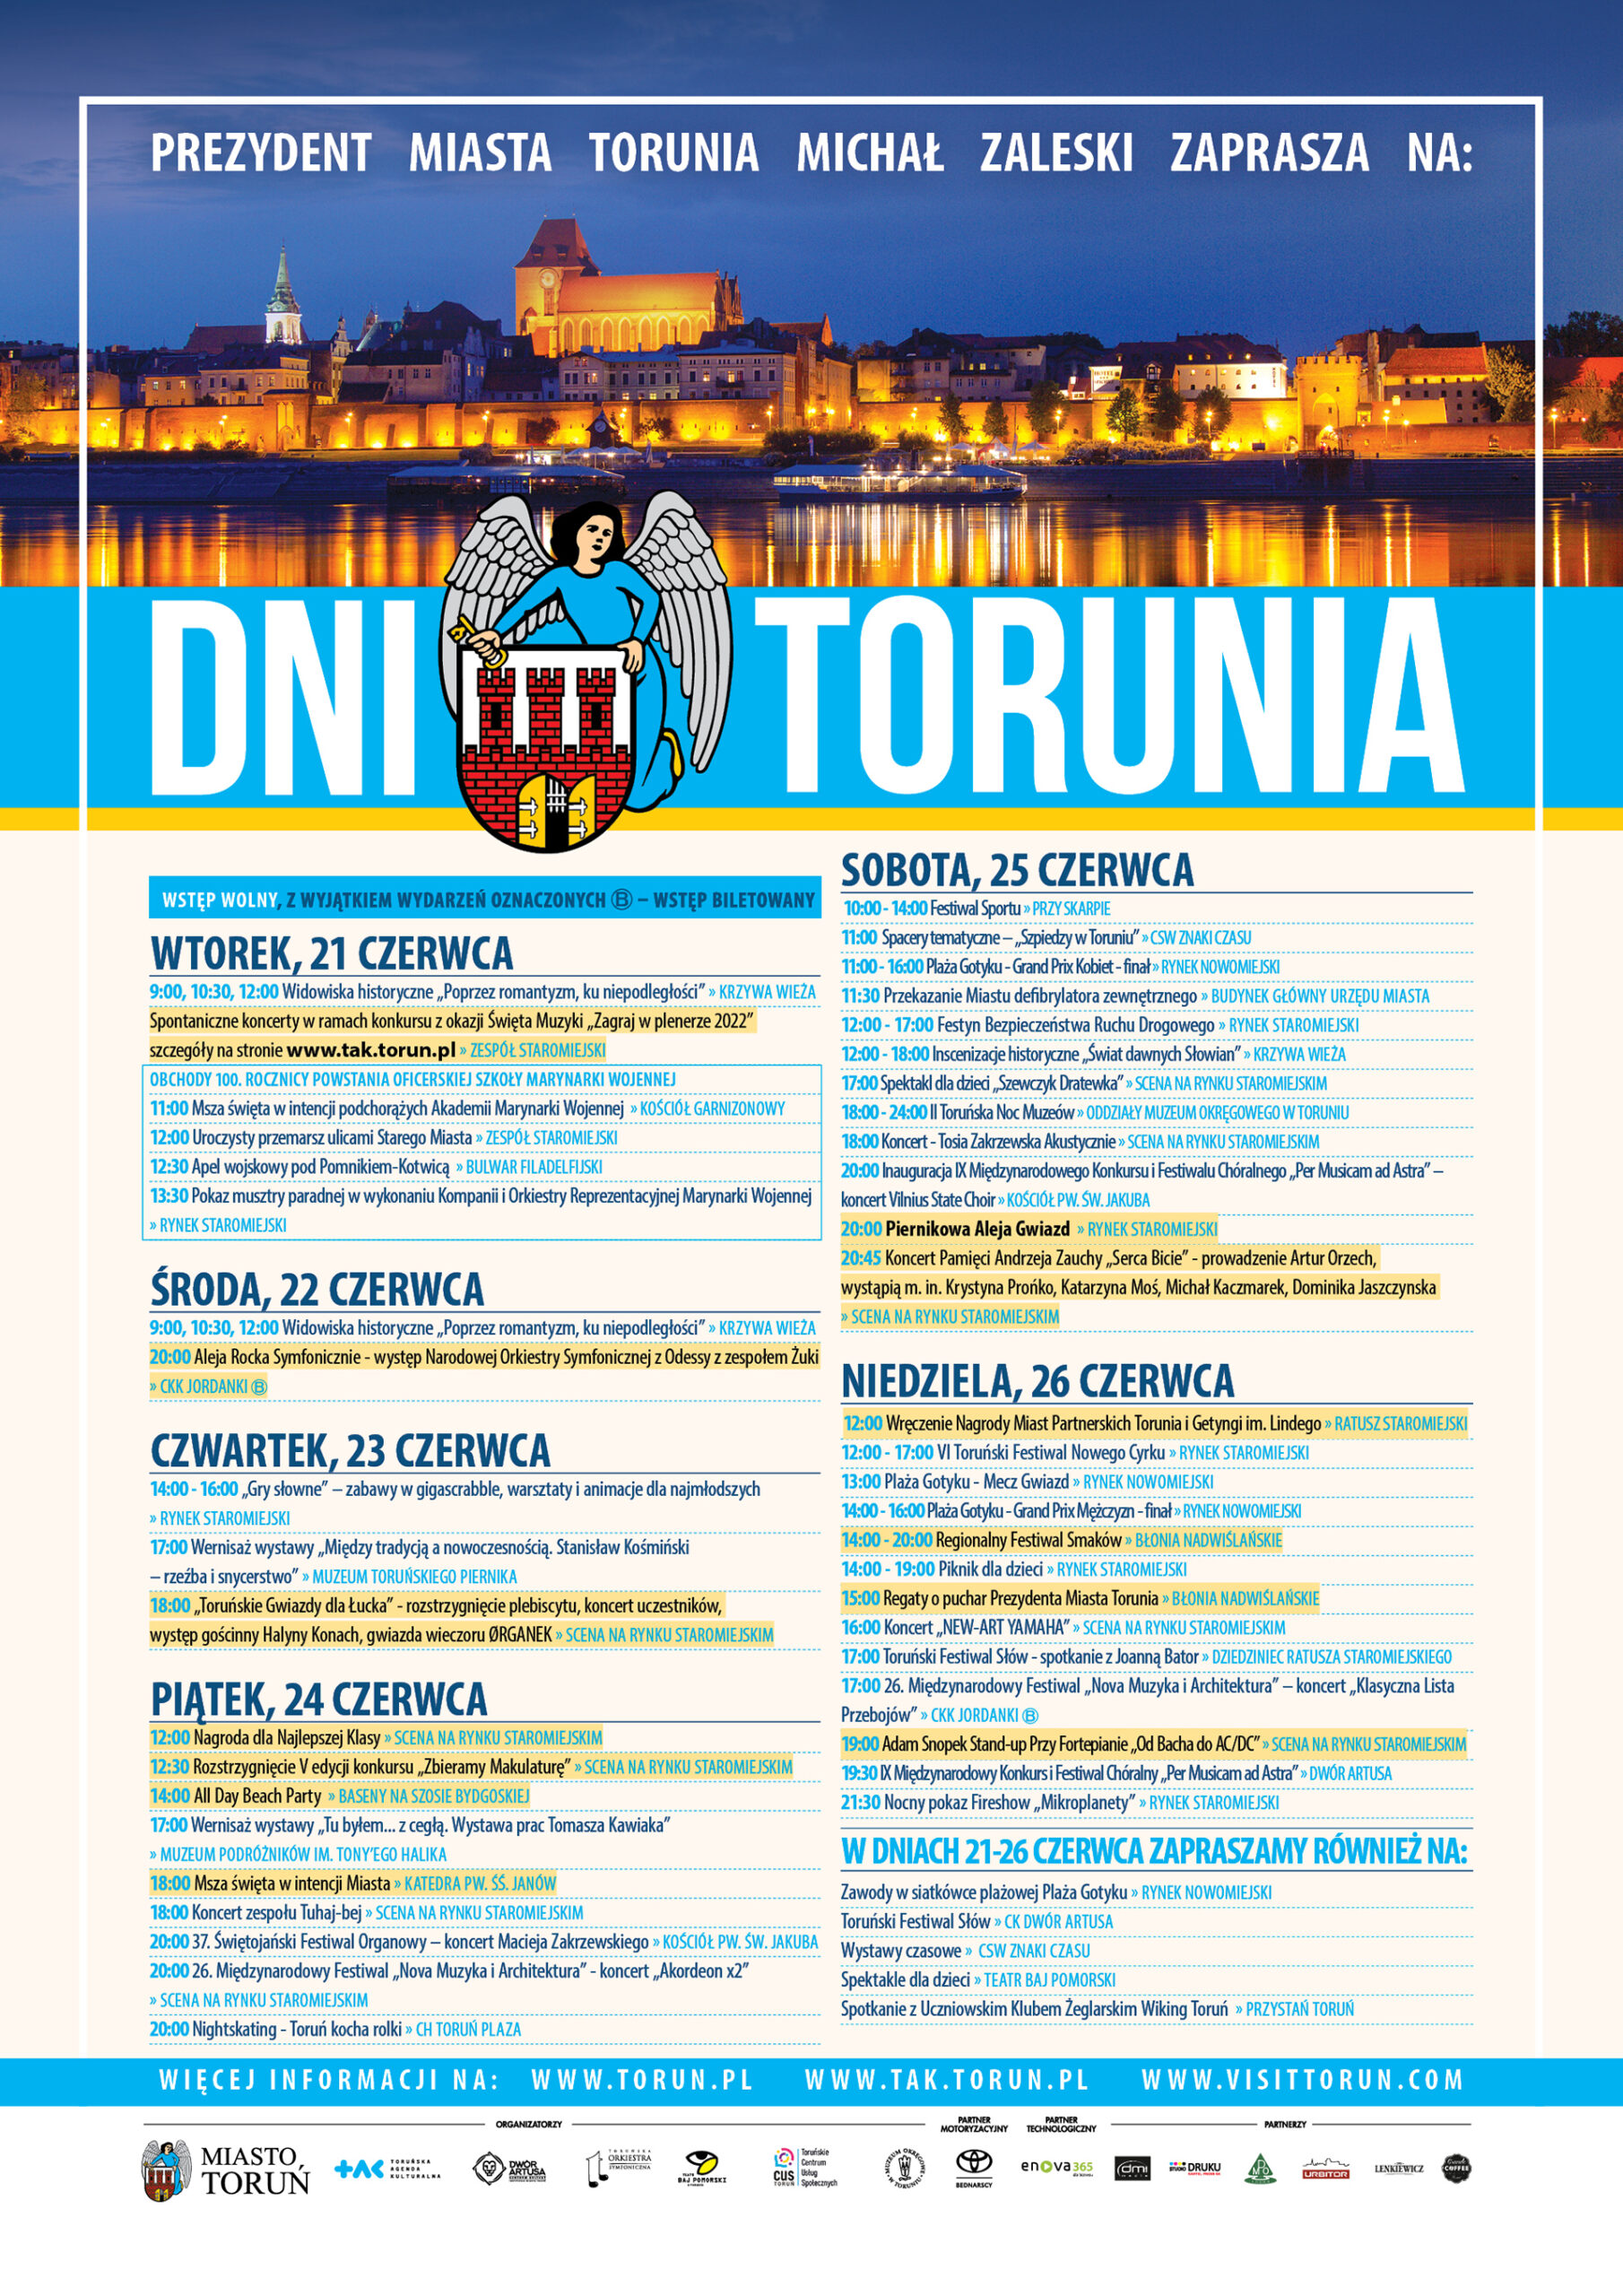 Plakat z programem Dni Torunia